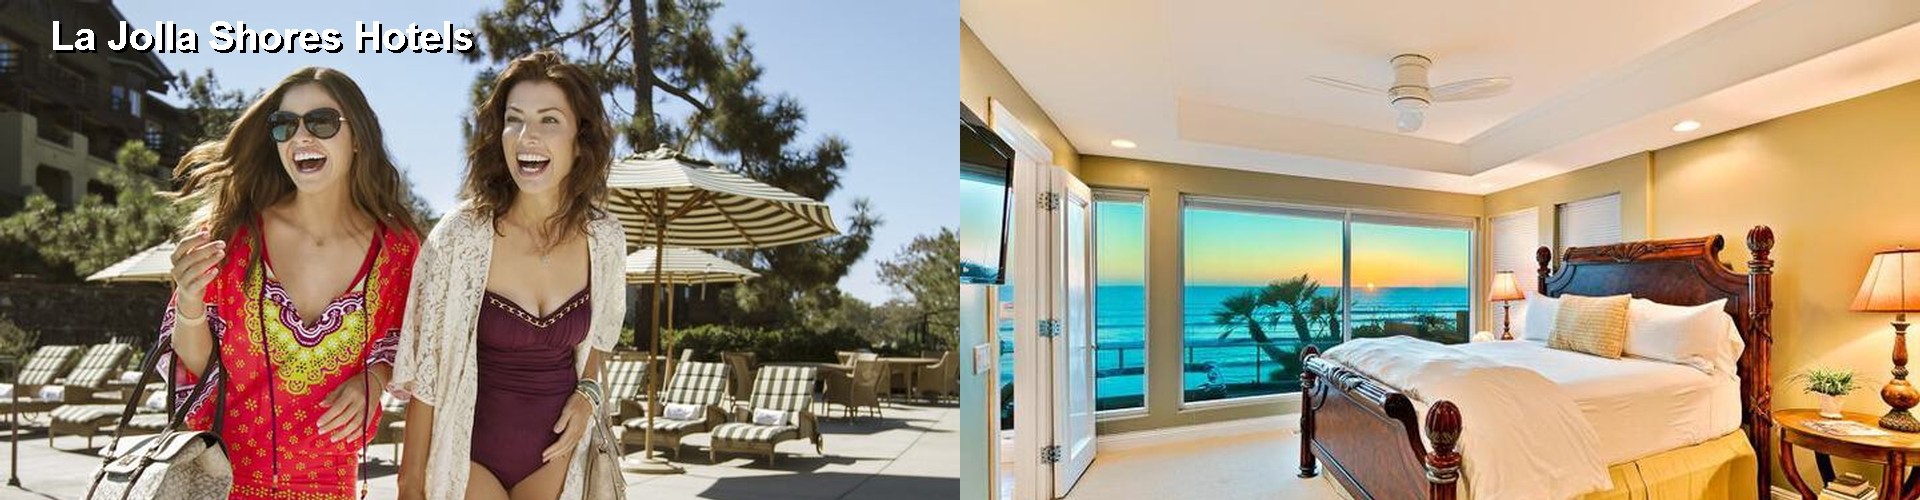 5 Best Hotels near La Jolla Shores